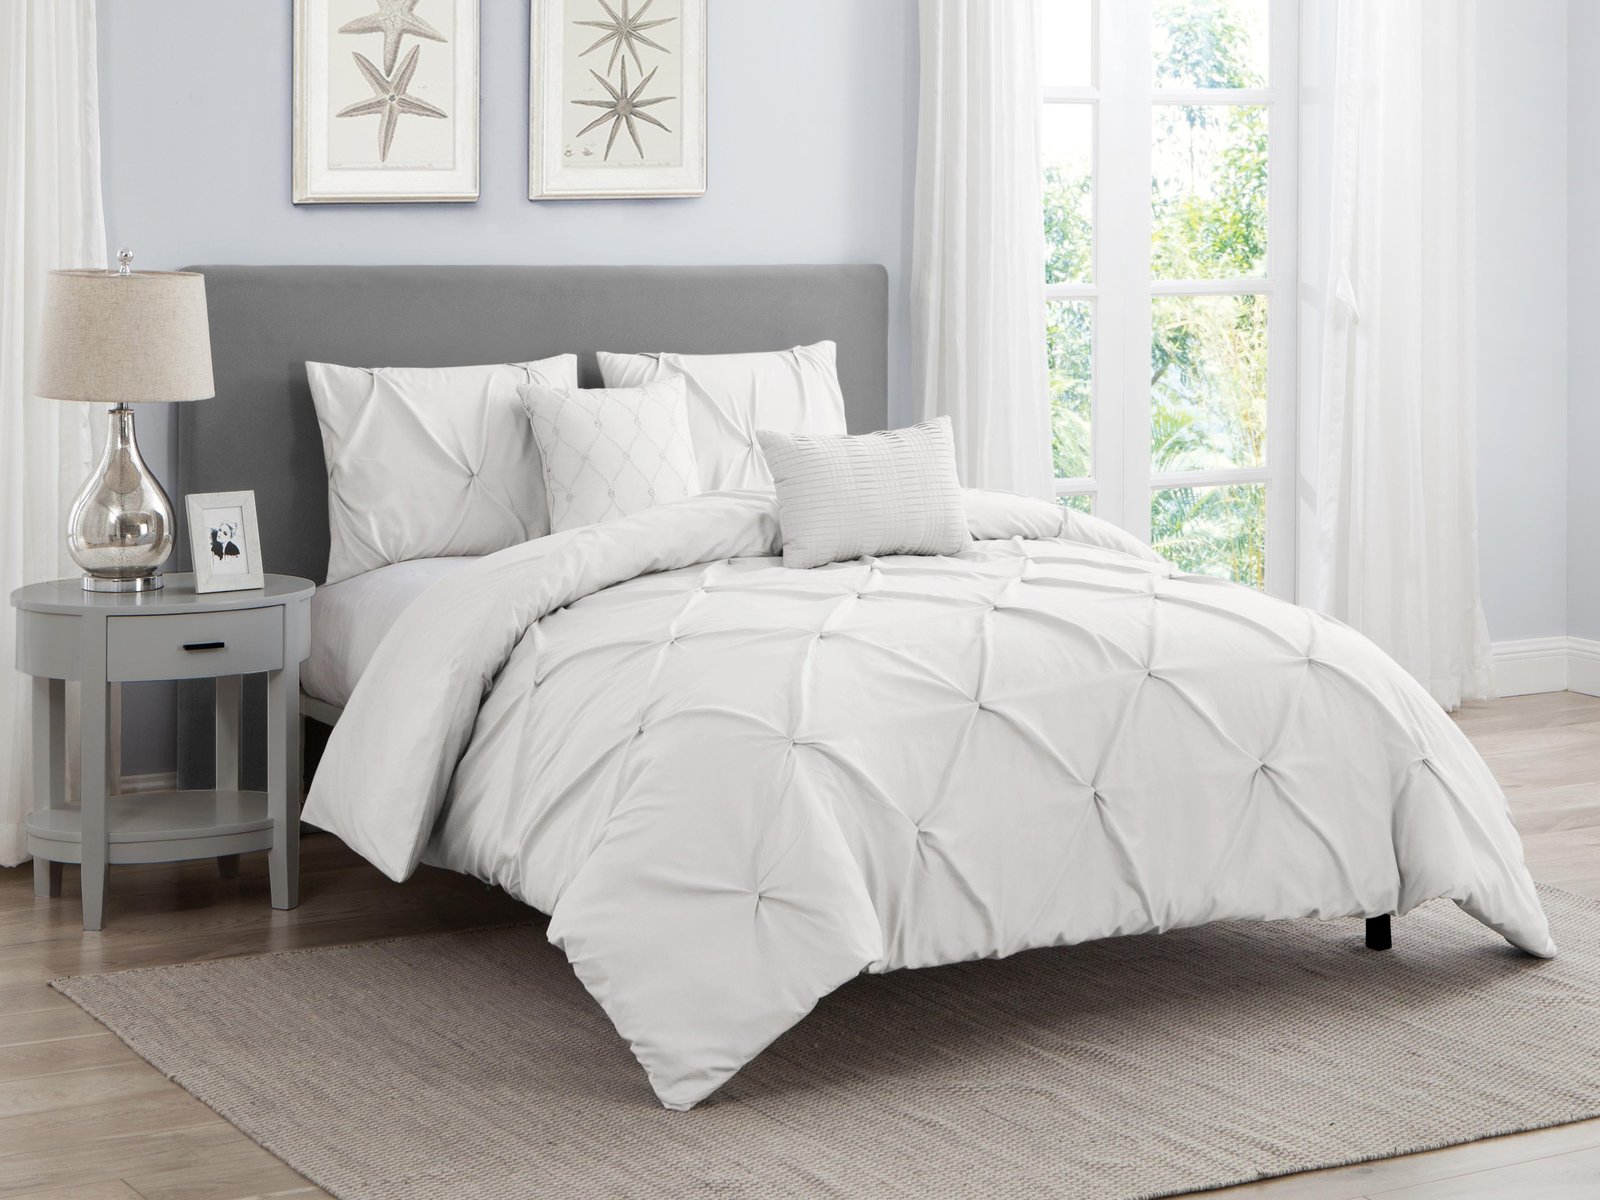 Hampton Pleated Comforter Set in Off White - $104.99 - $114.99